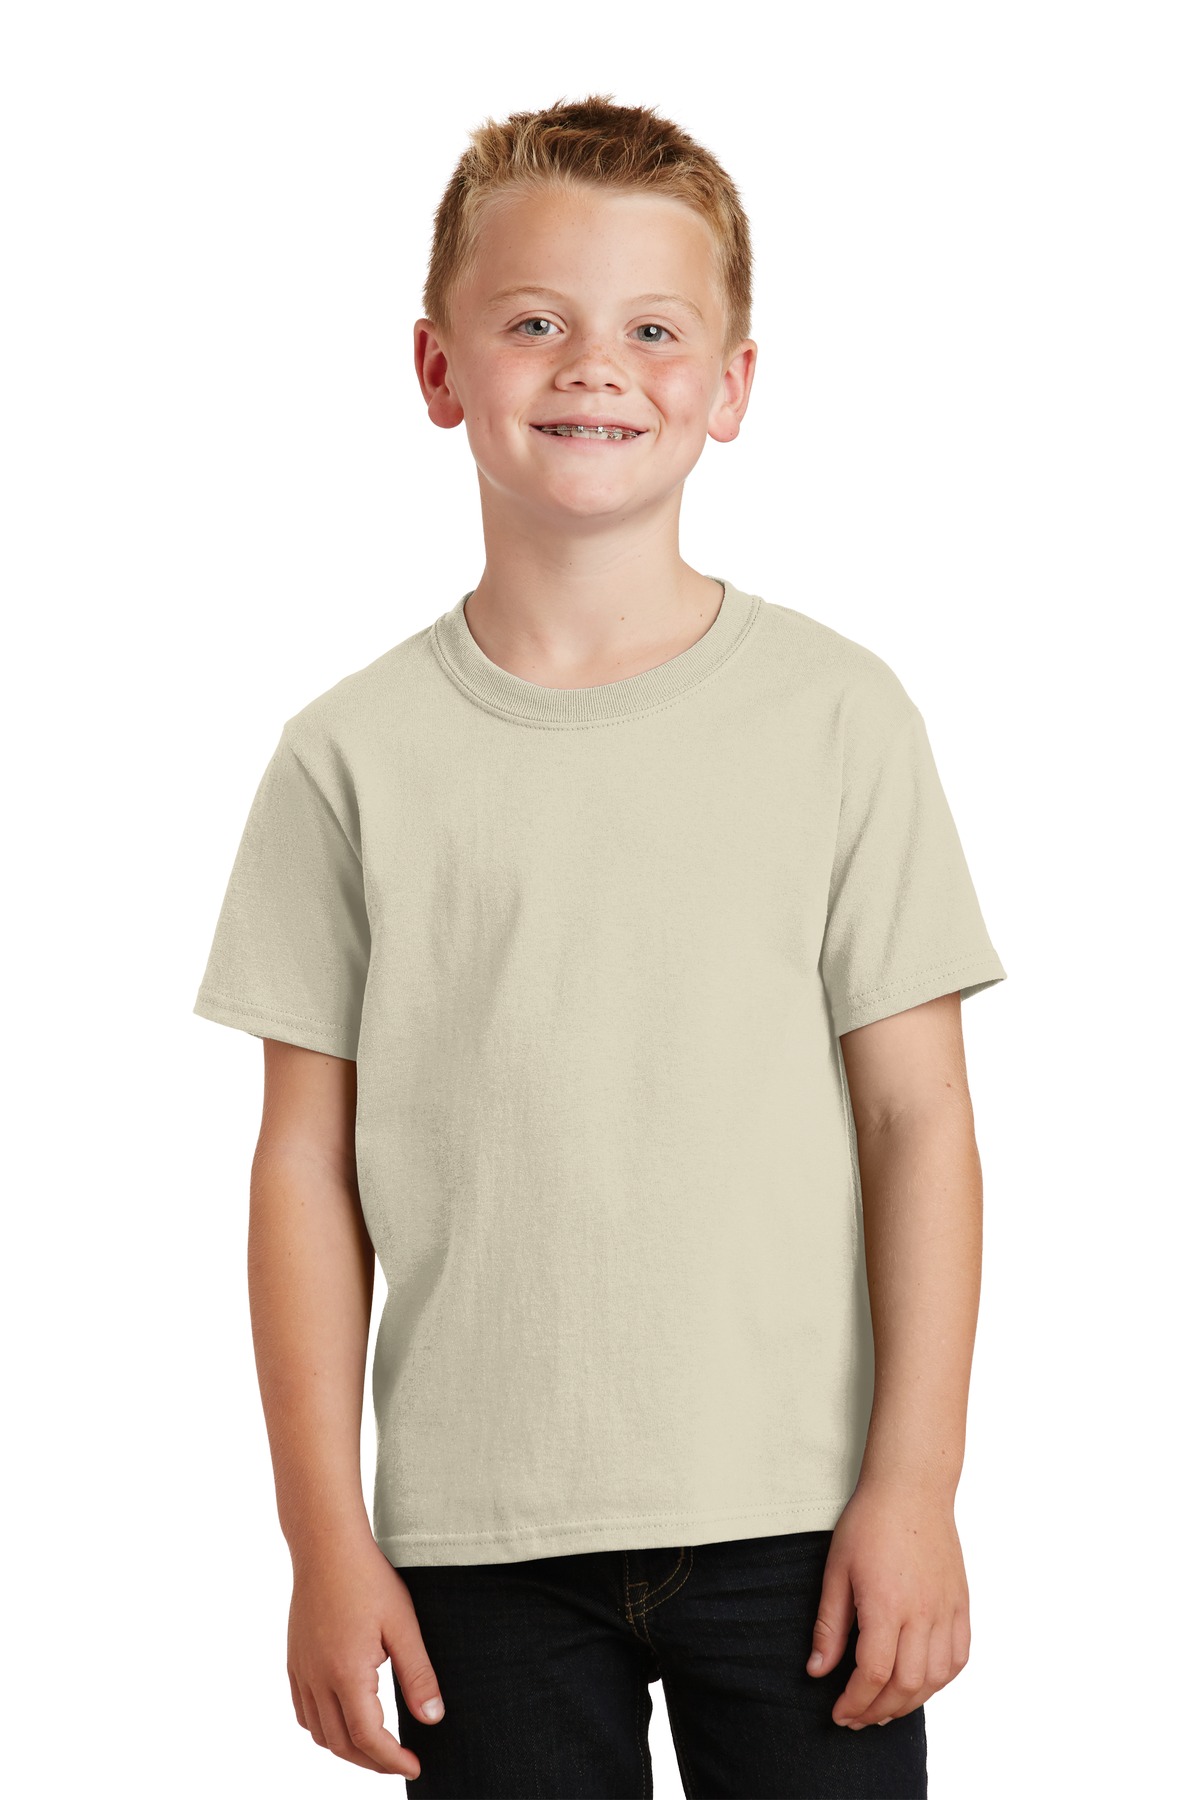 Port & Company Hospitality Youth T-Shirts ® - Youth Core Cotton Tee.-Port & Company